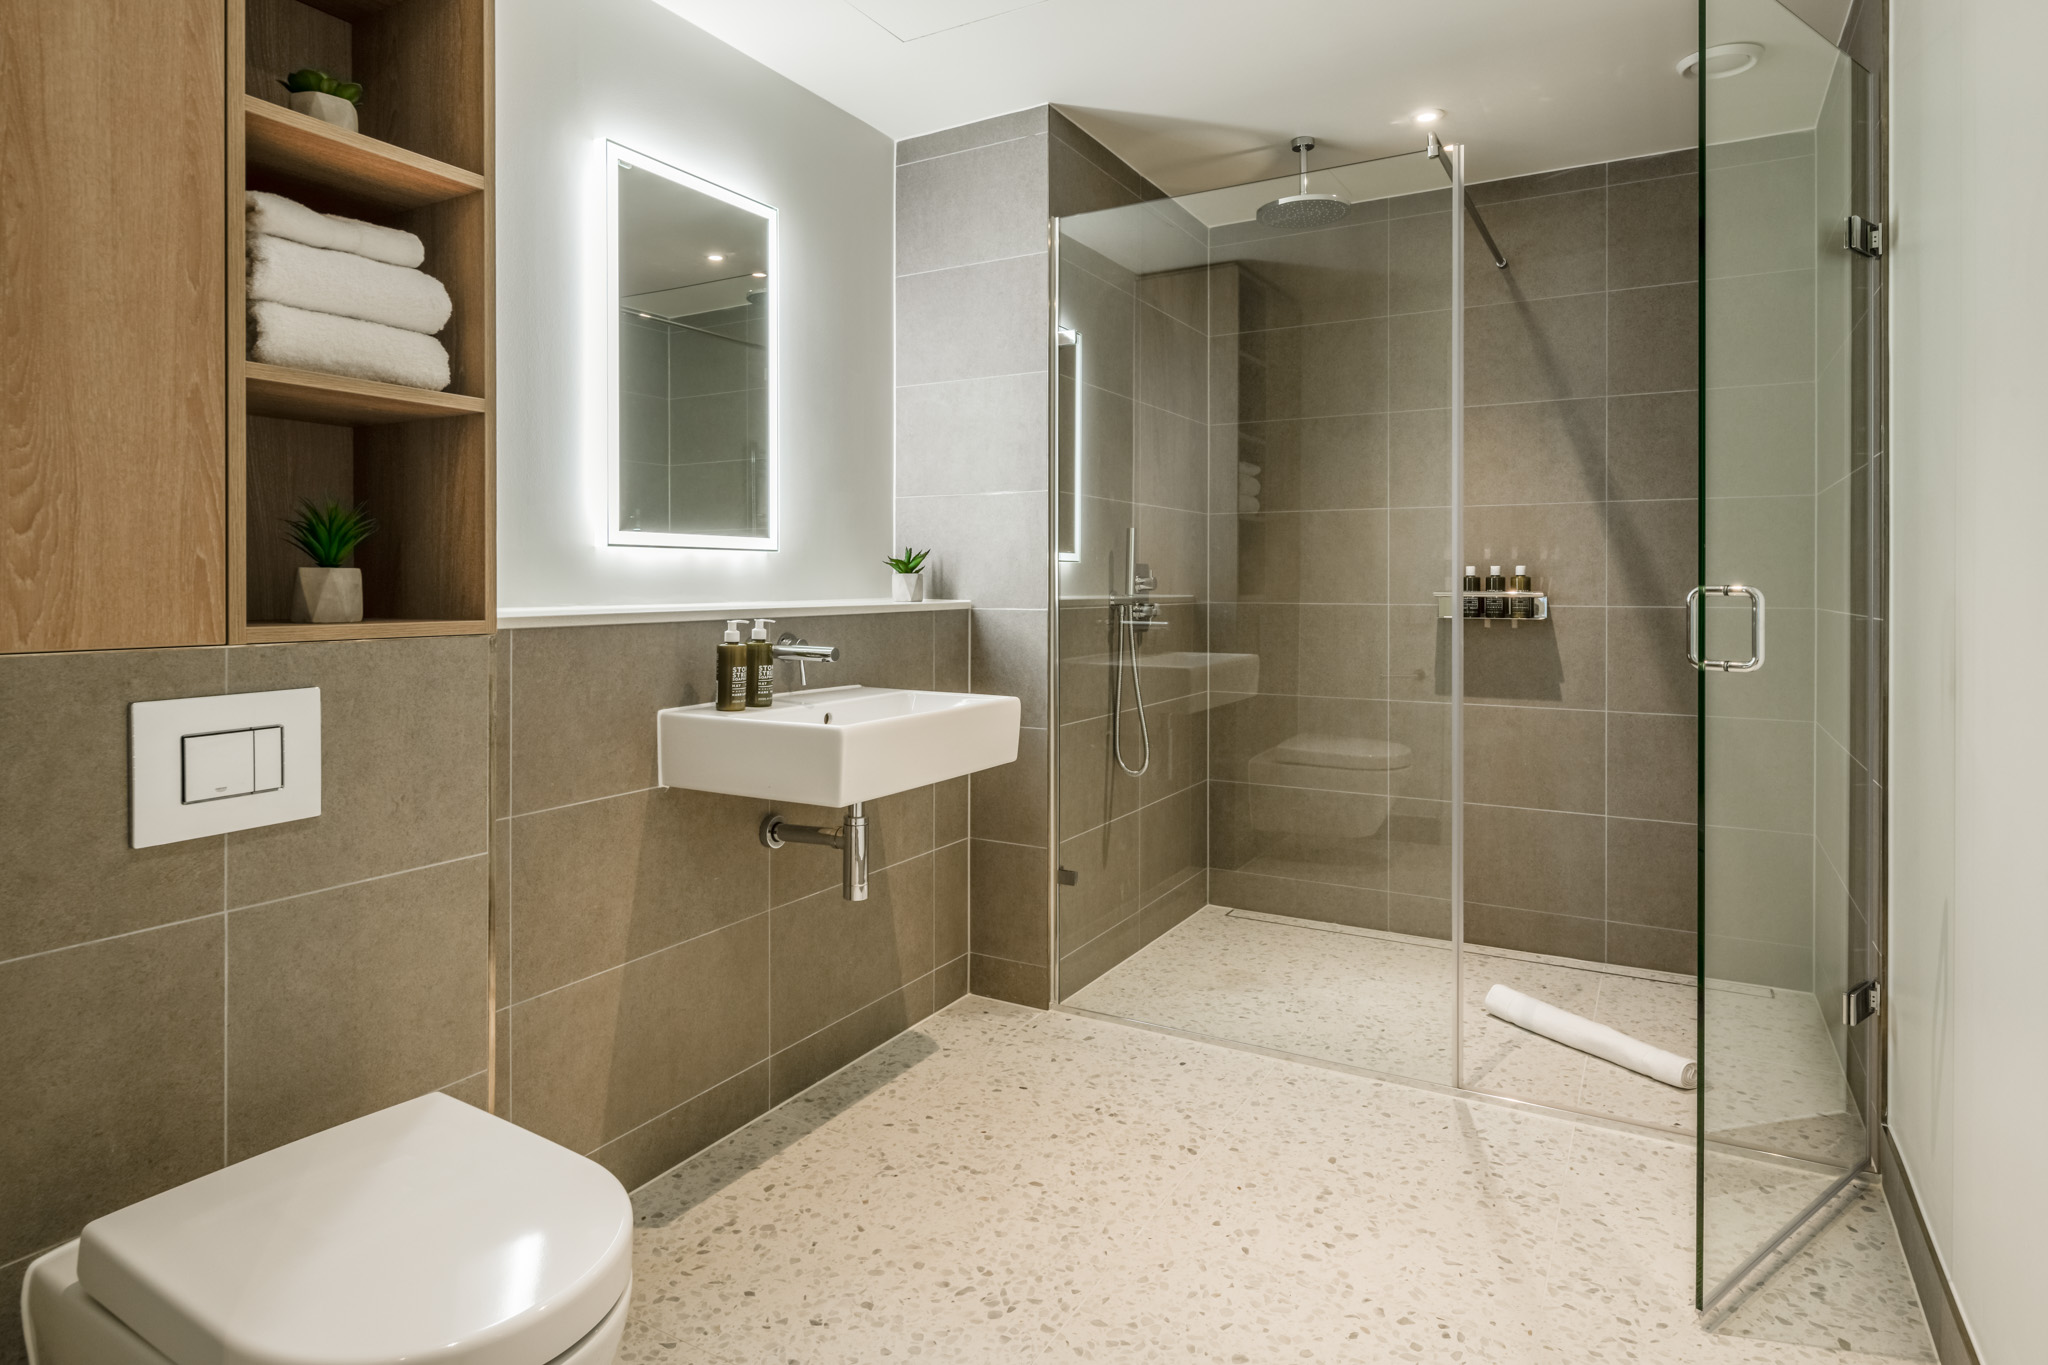 Bathroom - One Bedroom Apartment - Urban rest Battersea Apartments - London - Urban Rest